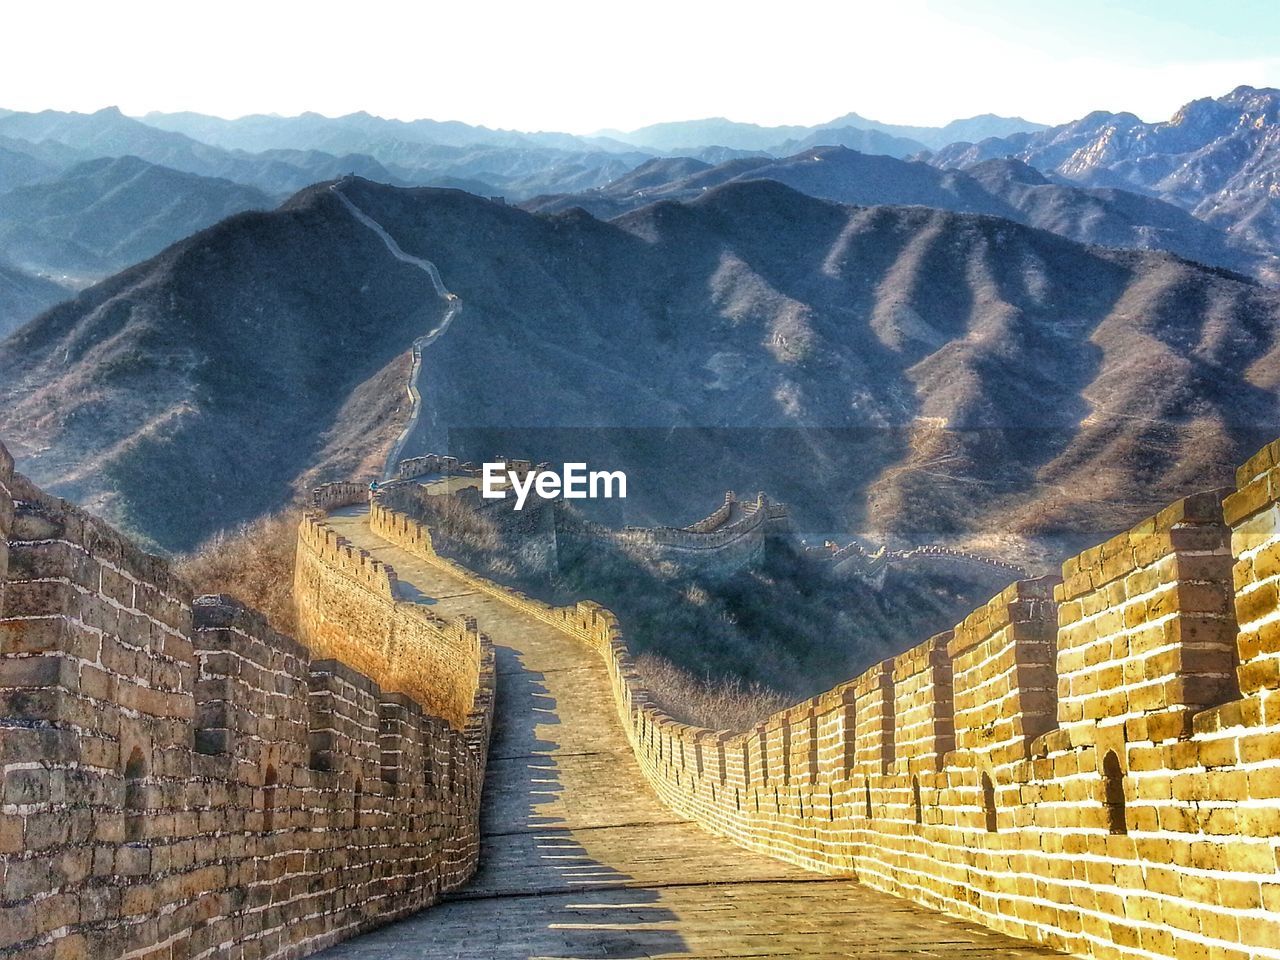 View along great wall of china